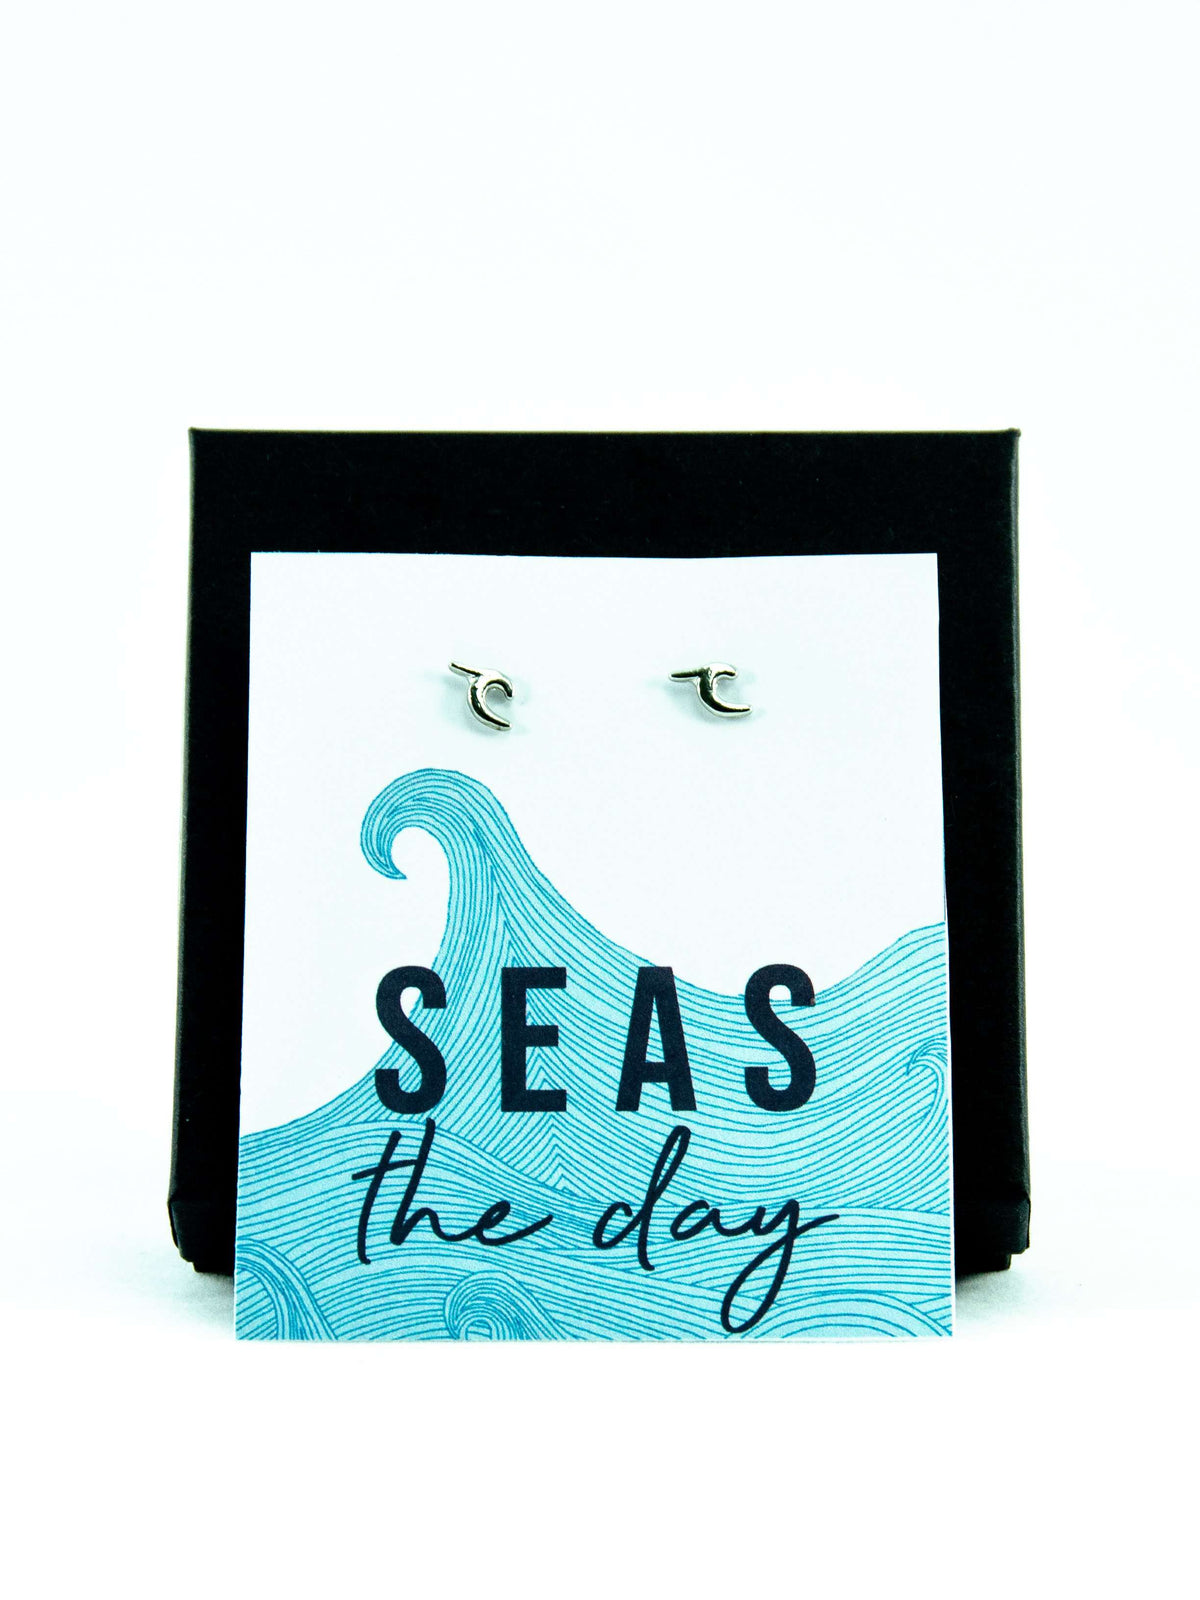 Nautical Beach Wave Stud Earrings Gifts for Her,Make Some Waves Silver Stud Earrings Gifts for Women,Ocean Beach Jewelry,Seas the Day Beach